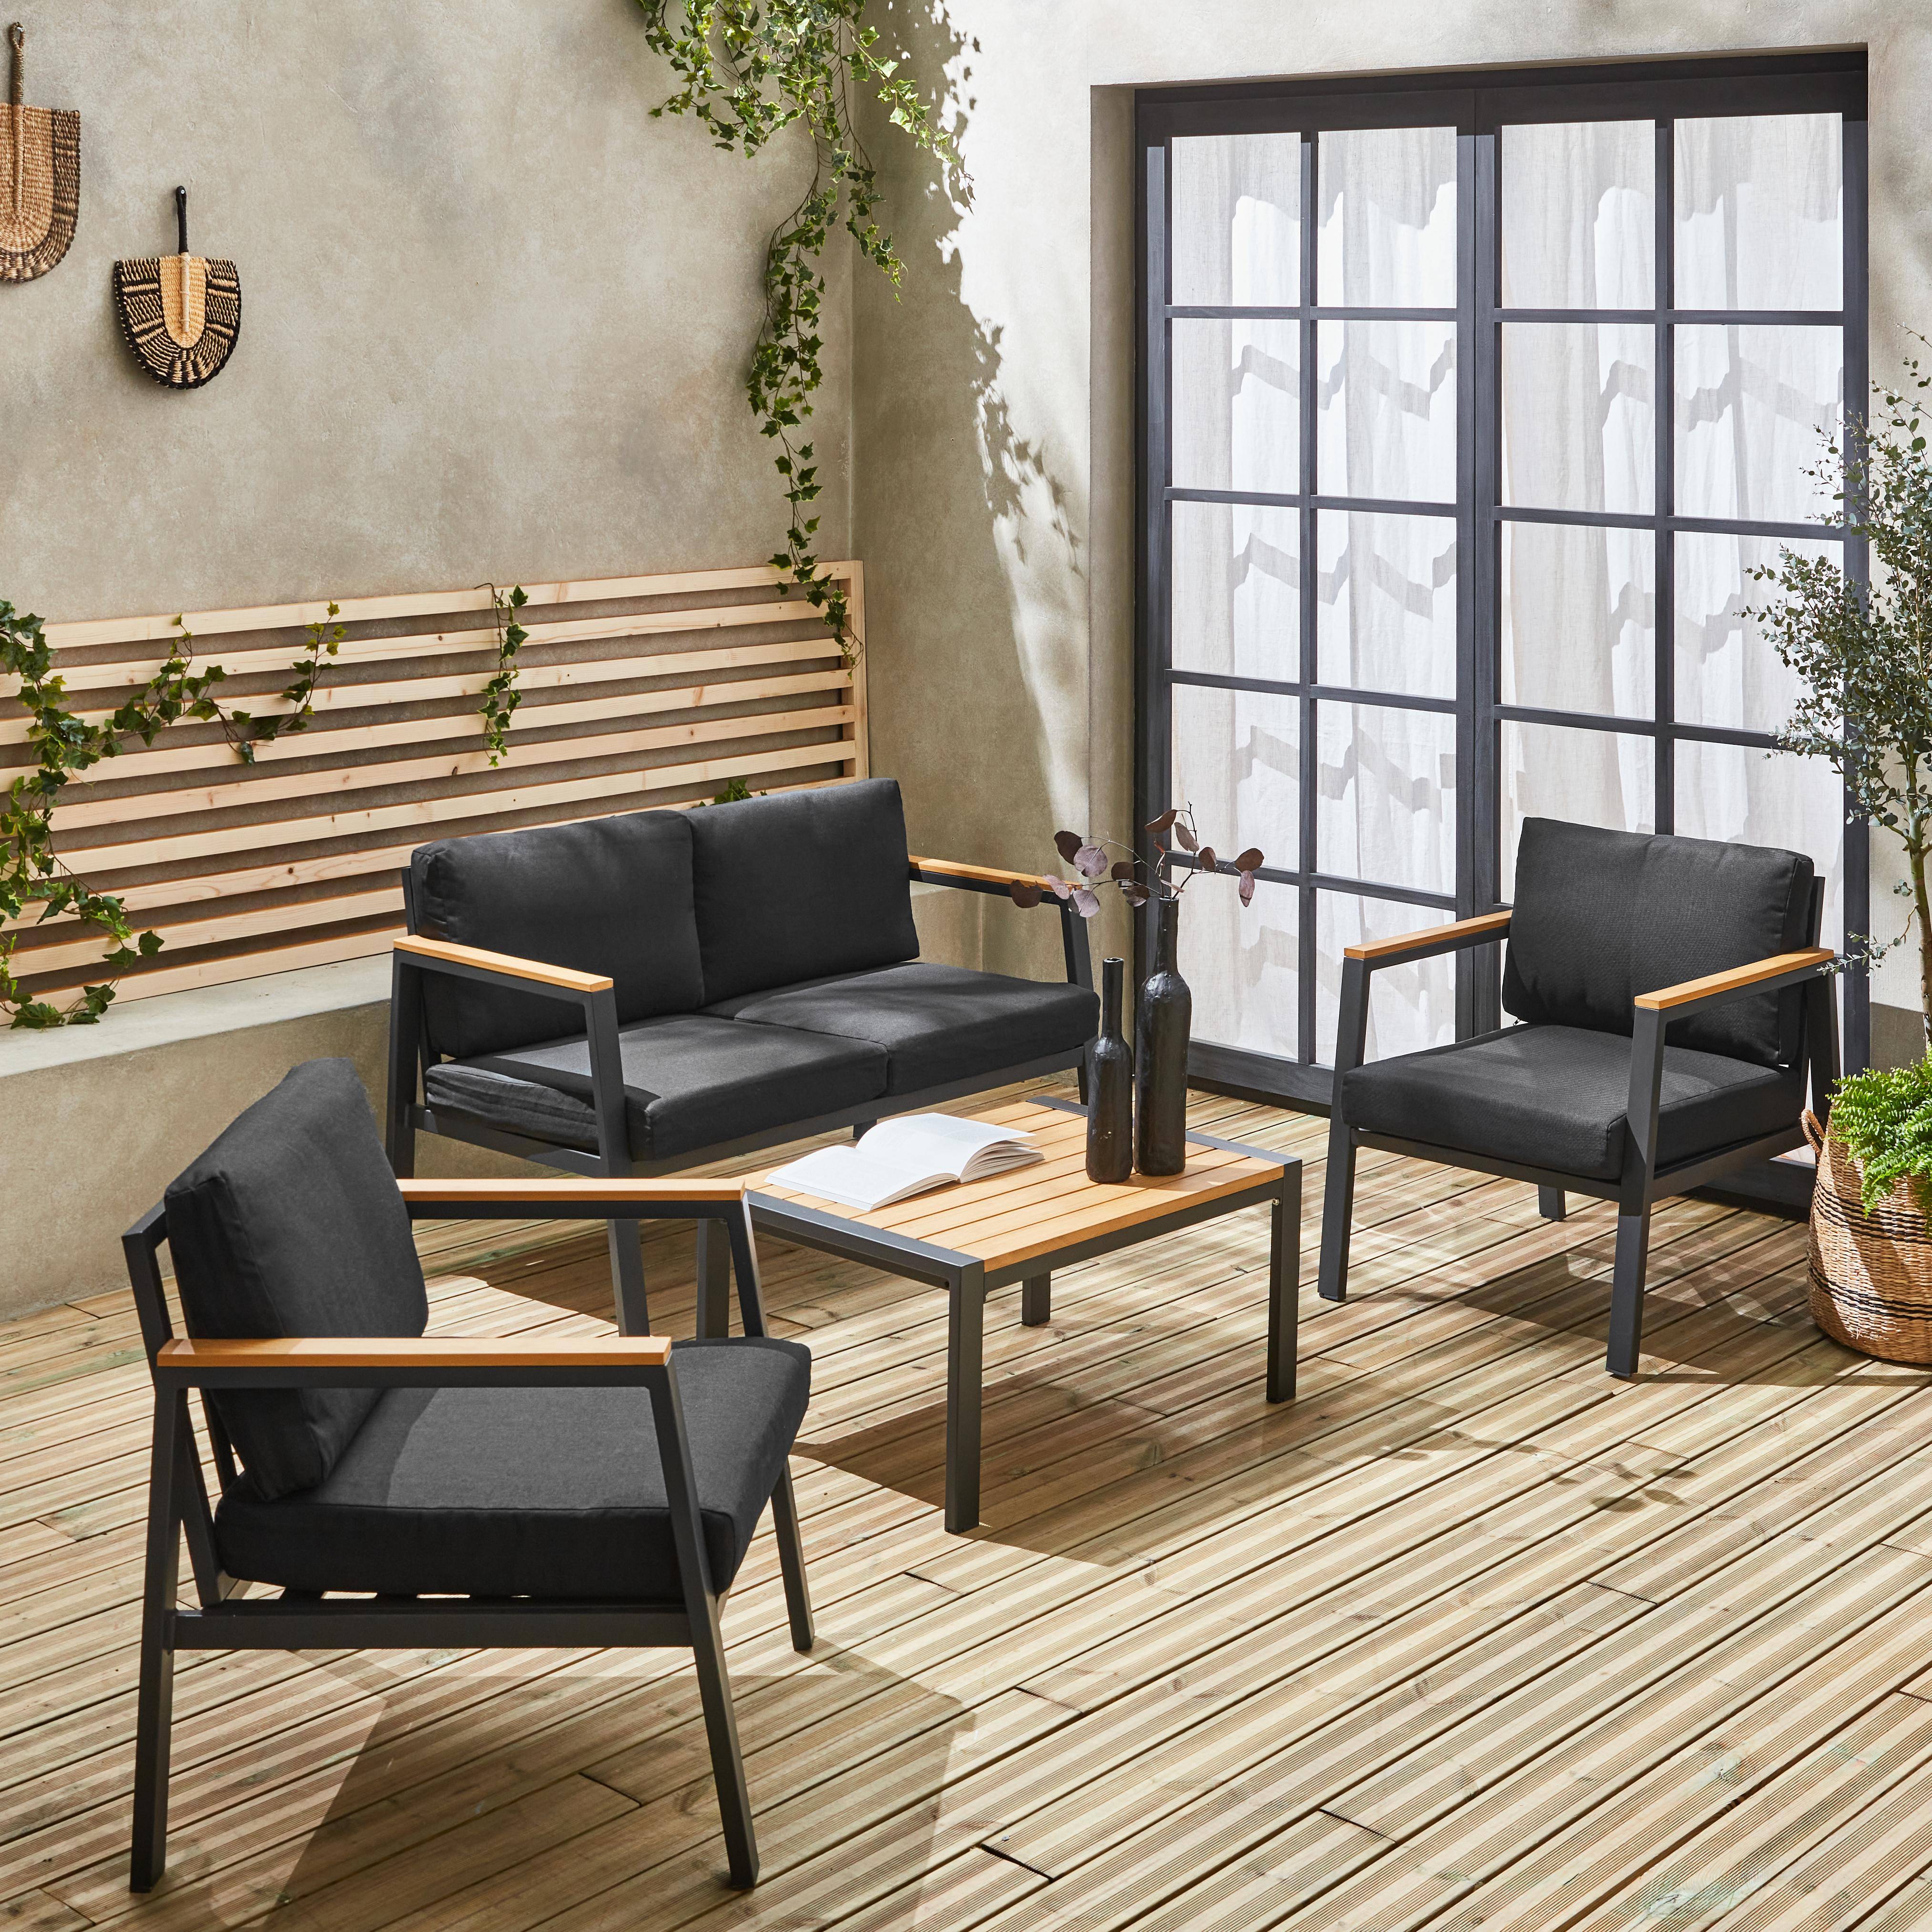 Salon de jardin Casoria, aluminium et polywood 4 places, 1 canapé, 2 fauteuils, 1 table basse Photo1